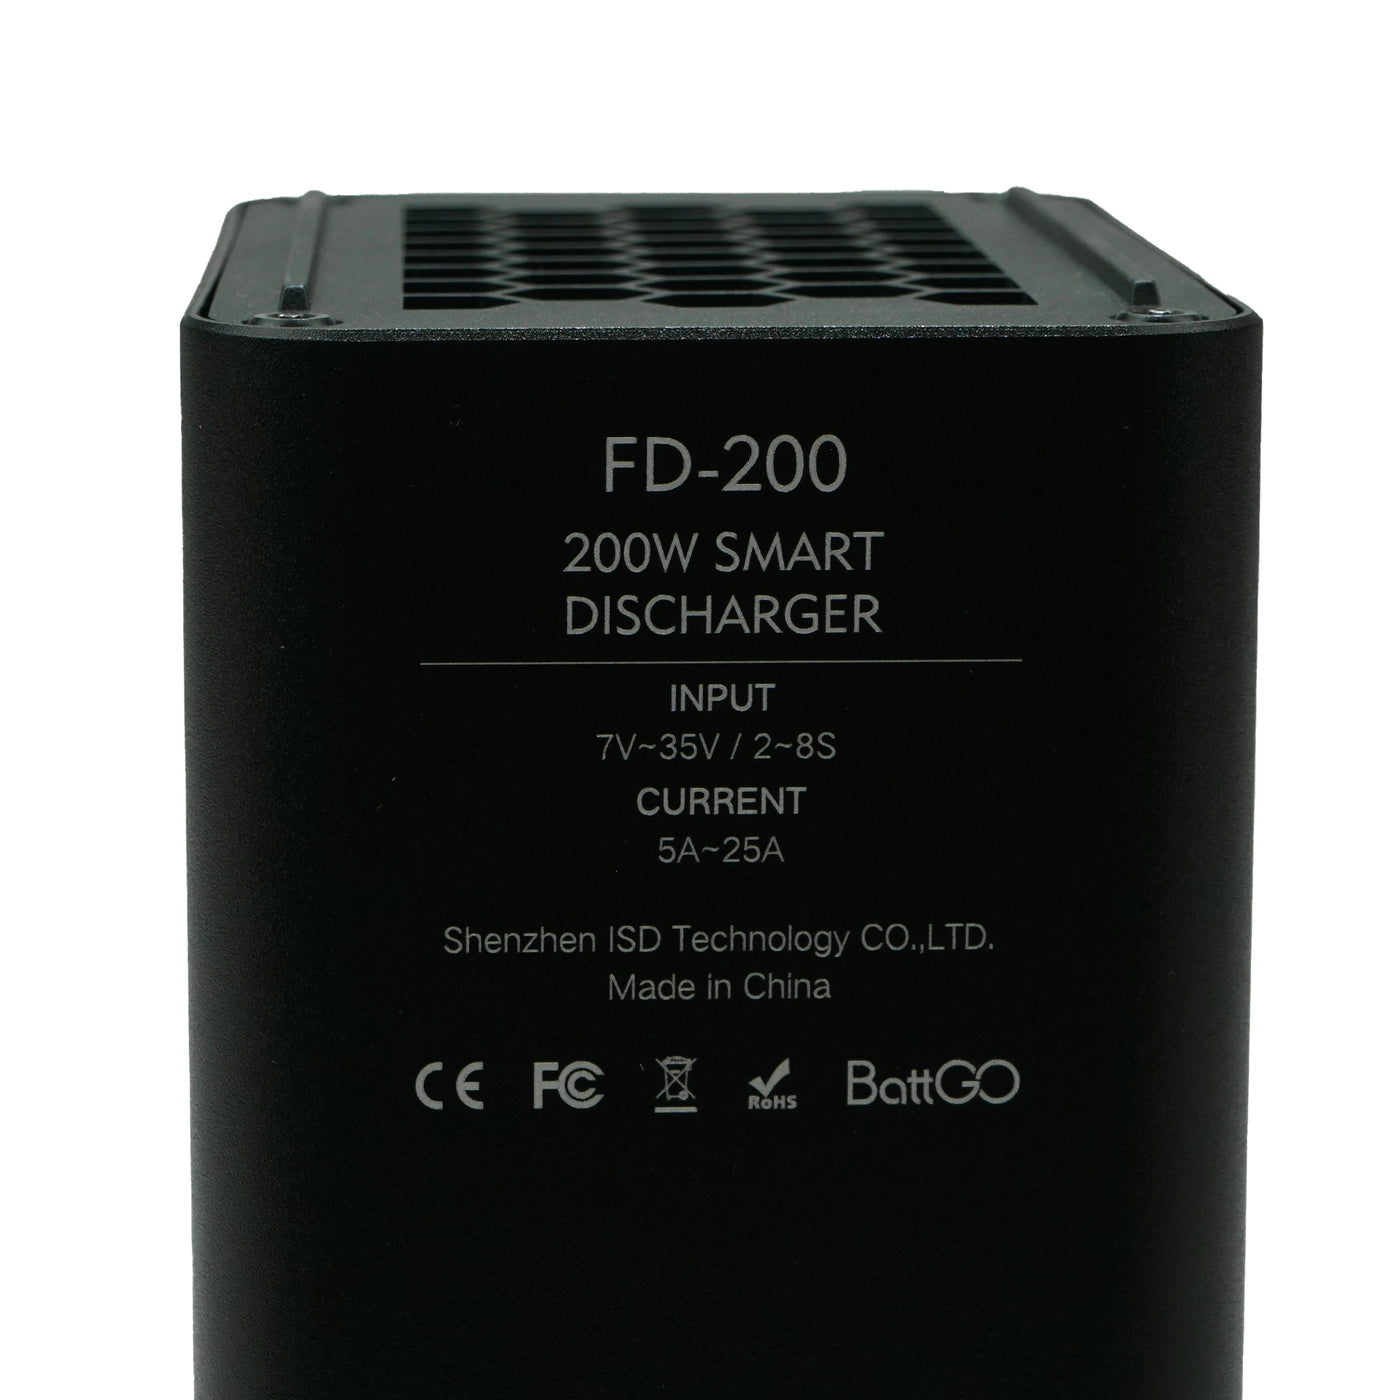 Battery Discharger Device - Gen1